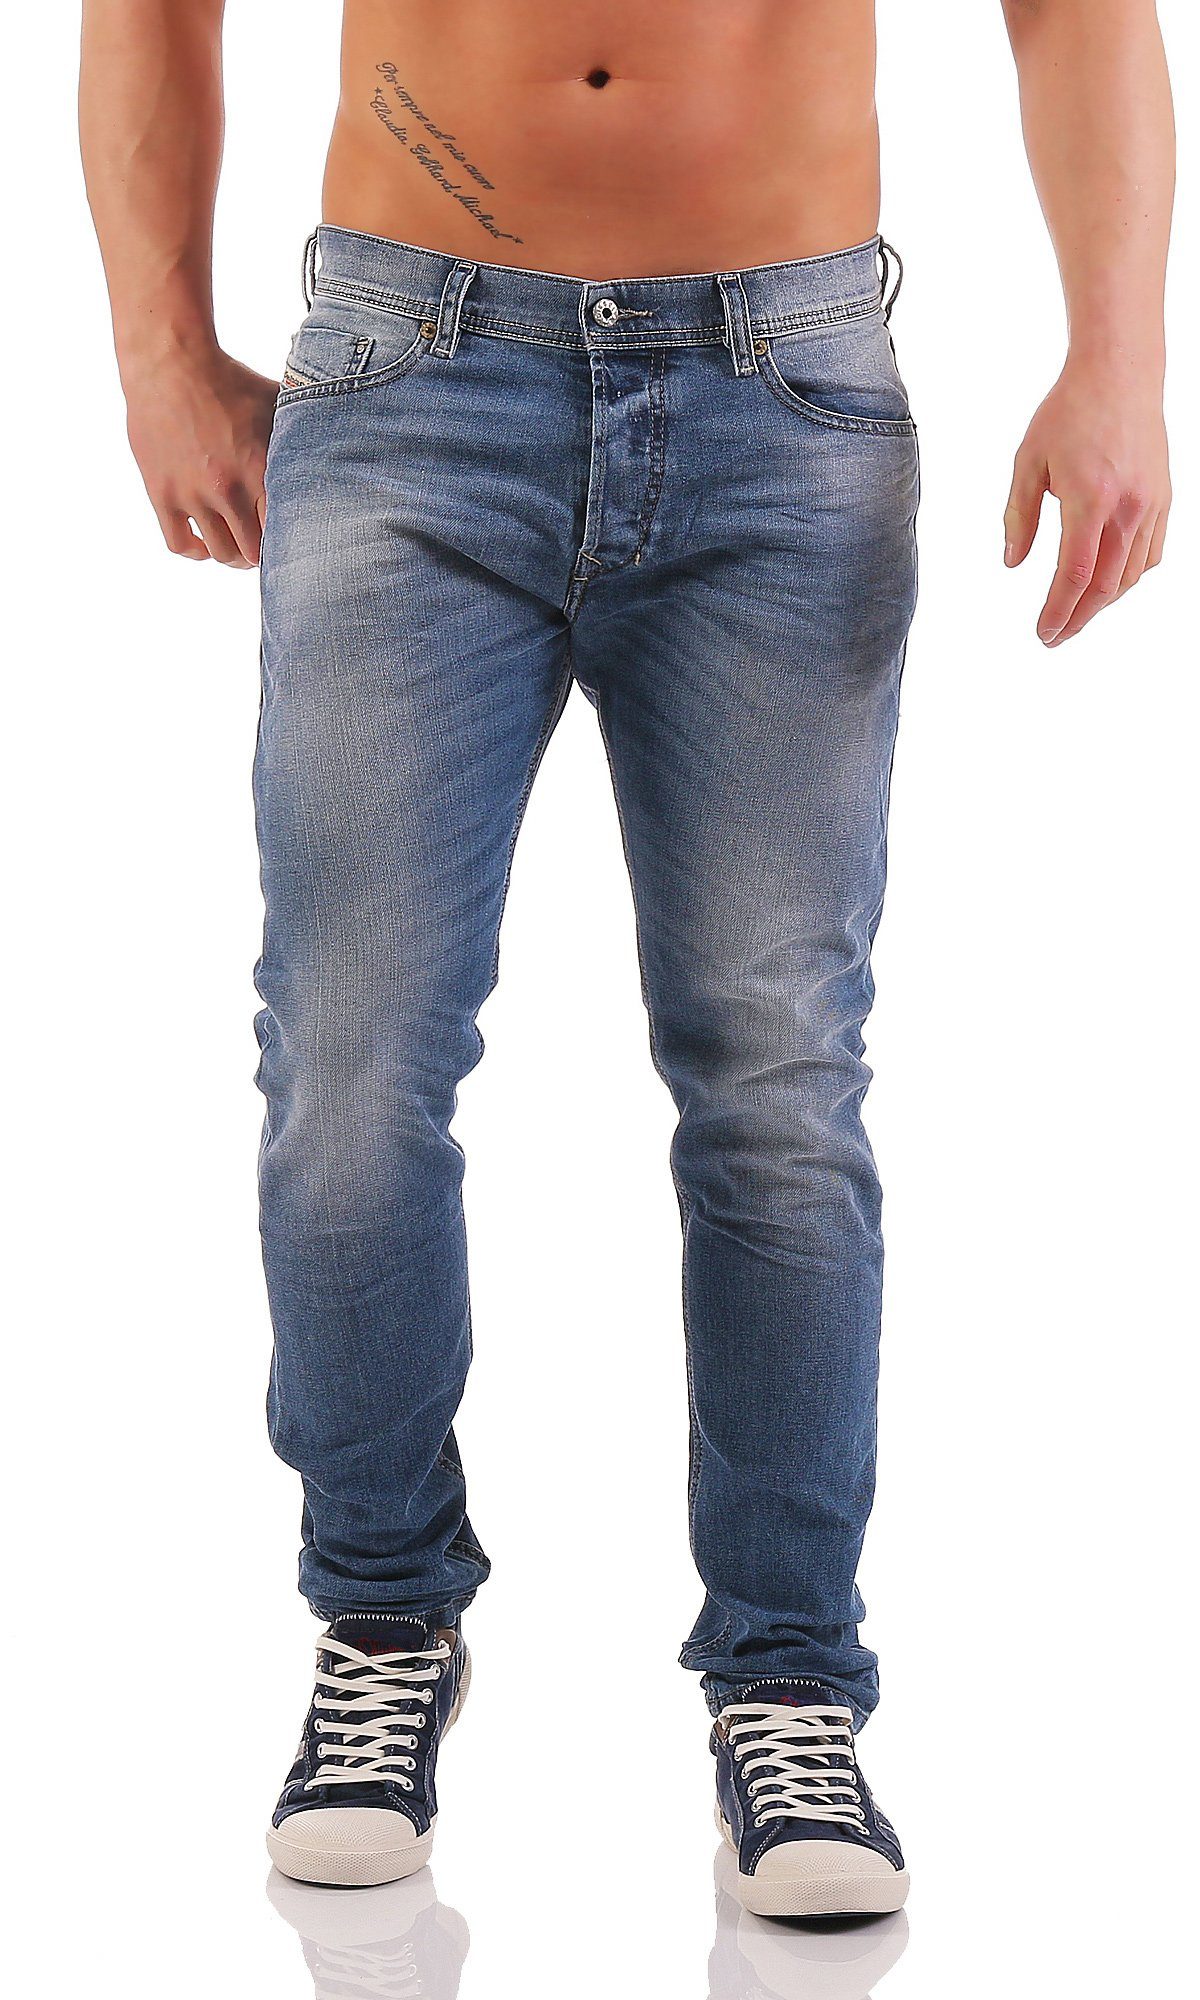 Größe: Herren 0842H Style, Röhrenjeans, L32 Stretch, 5 Dezenter Diesel Used-Look, Pocket W28 Blau, Tepphar Stretch-Jeans